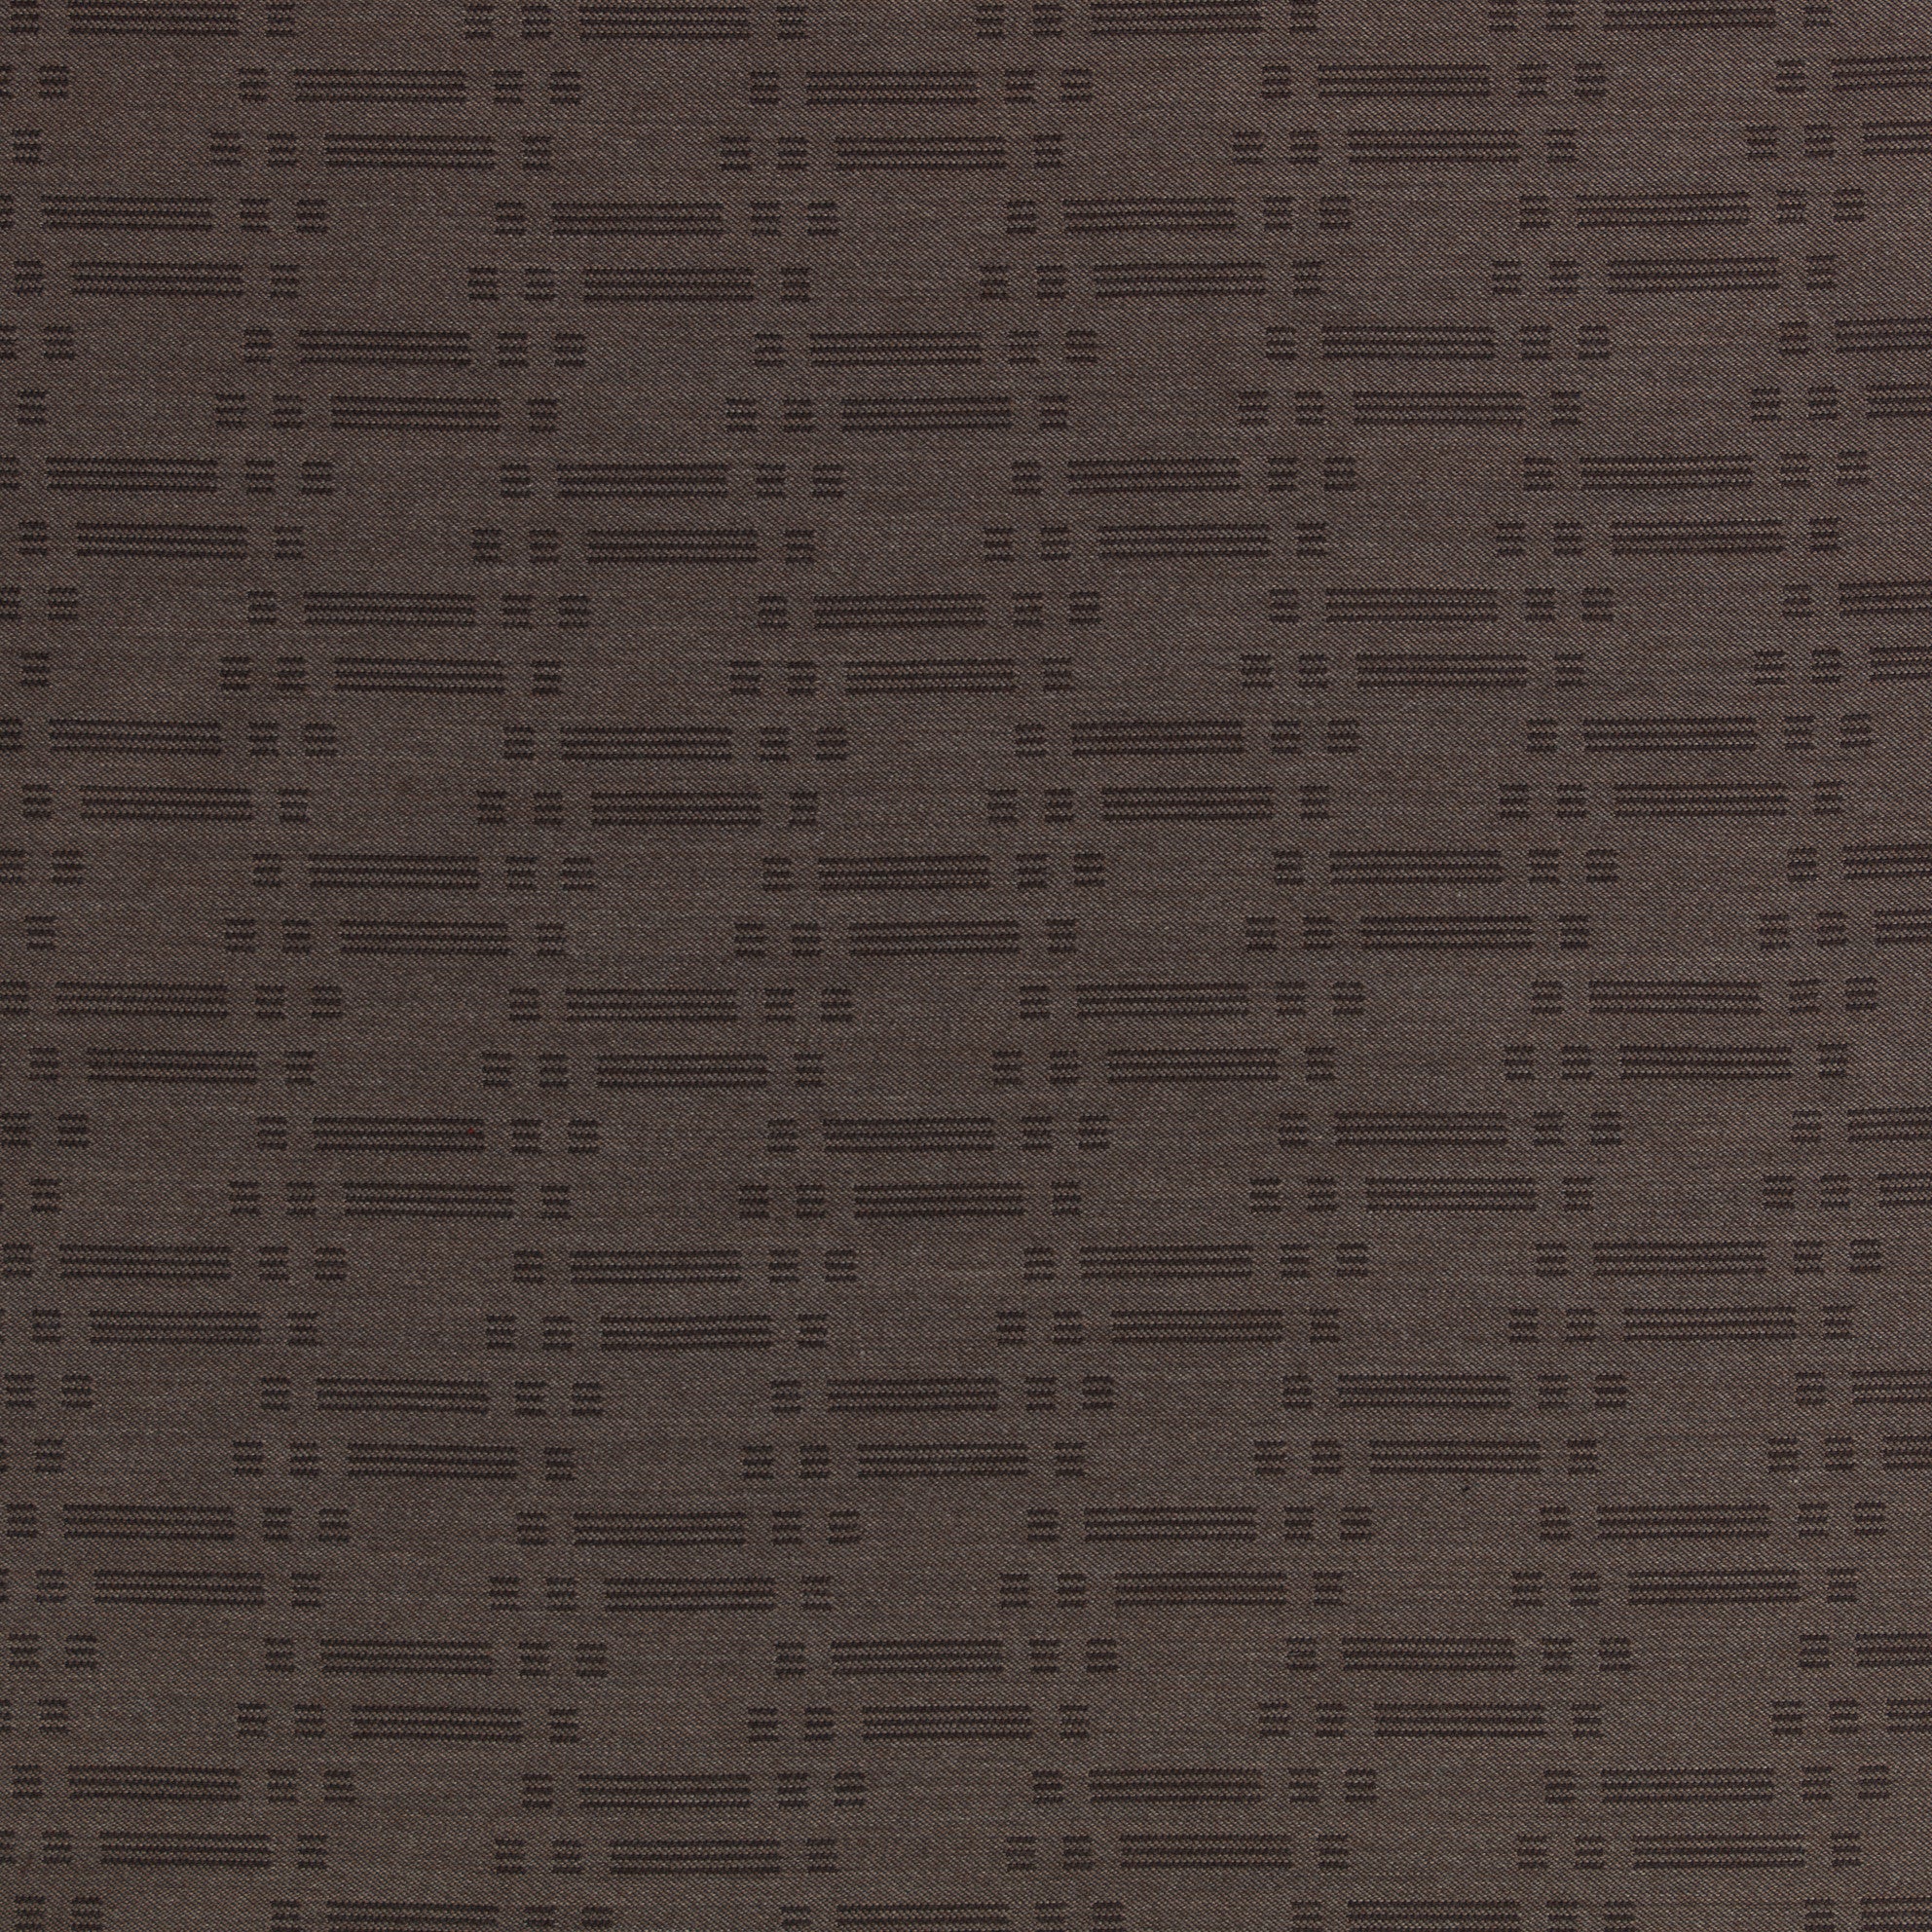 Triton Contract Furnishing Fabric - Brown Reverse | Nicholas Engert Interiors